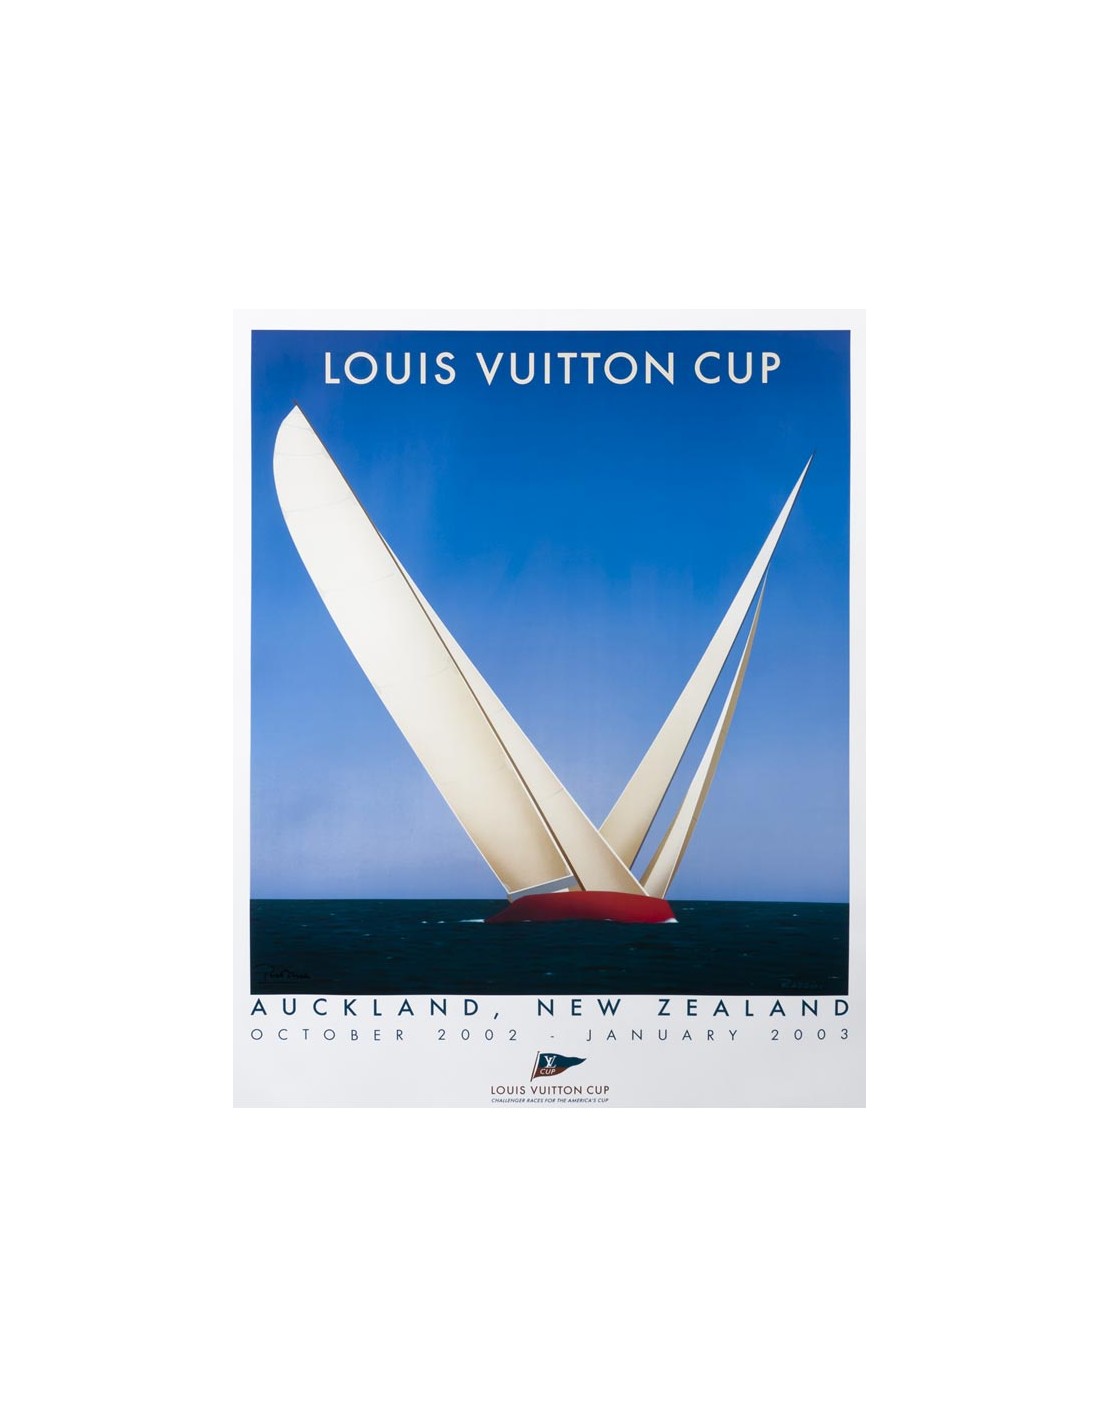 Louis Vuitton Cup, San Francisco, 2013 large poster by Razzia